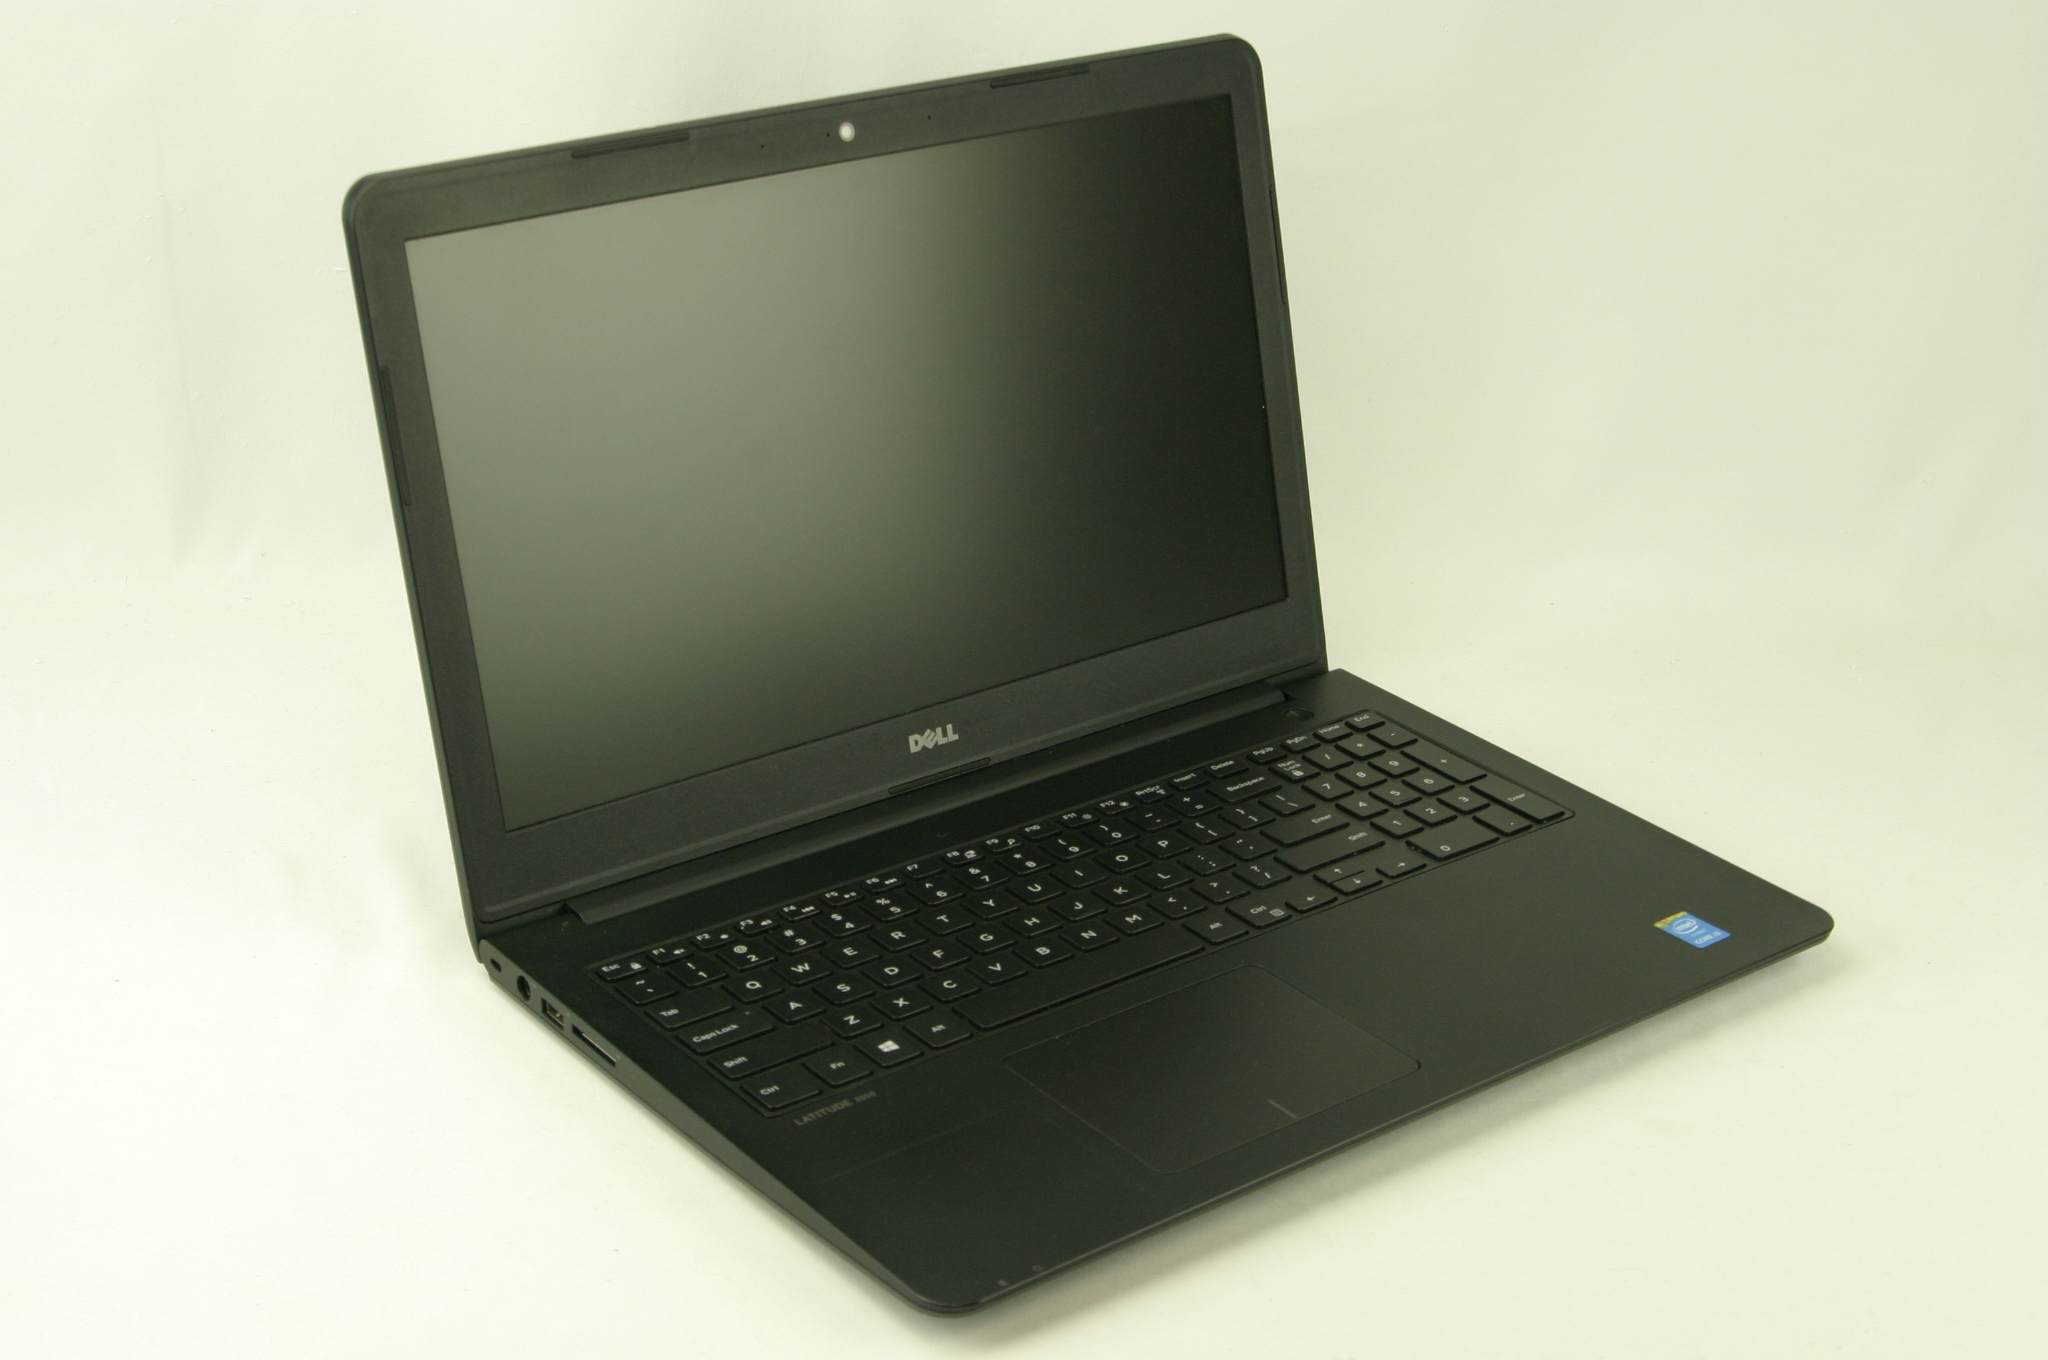 Dell Latitude 3550 laptop
i3-5005u 2.00Ghz cpu
8Gb DDR3 memory
256Gb SSD
Intel HD Graphics 5500
No optical drive
Windows 10 Pro 64bit
sku: 48R4042